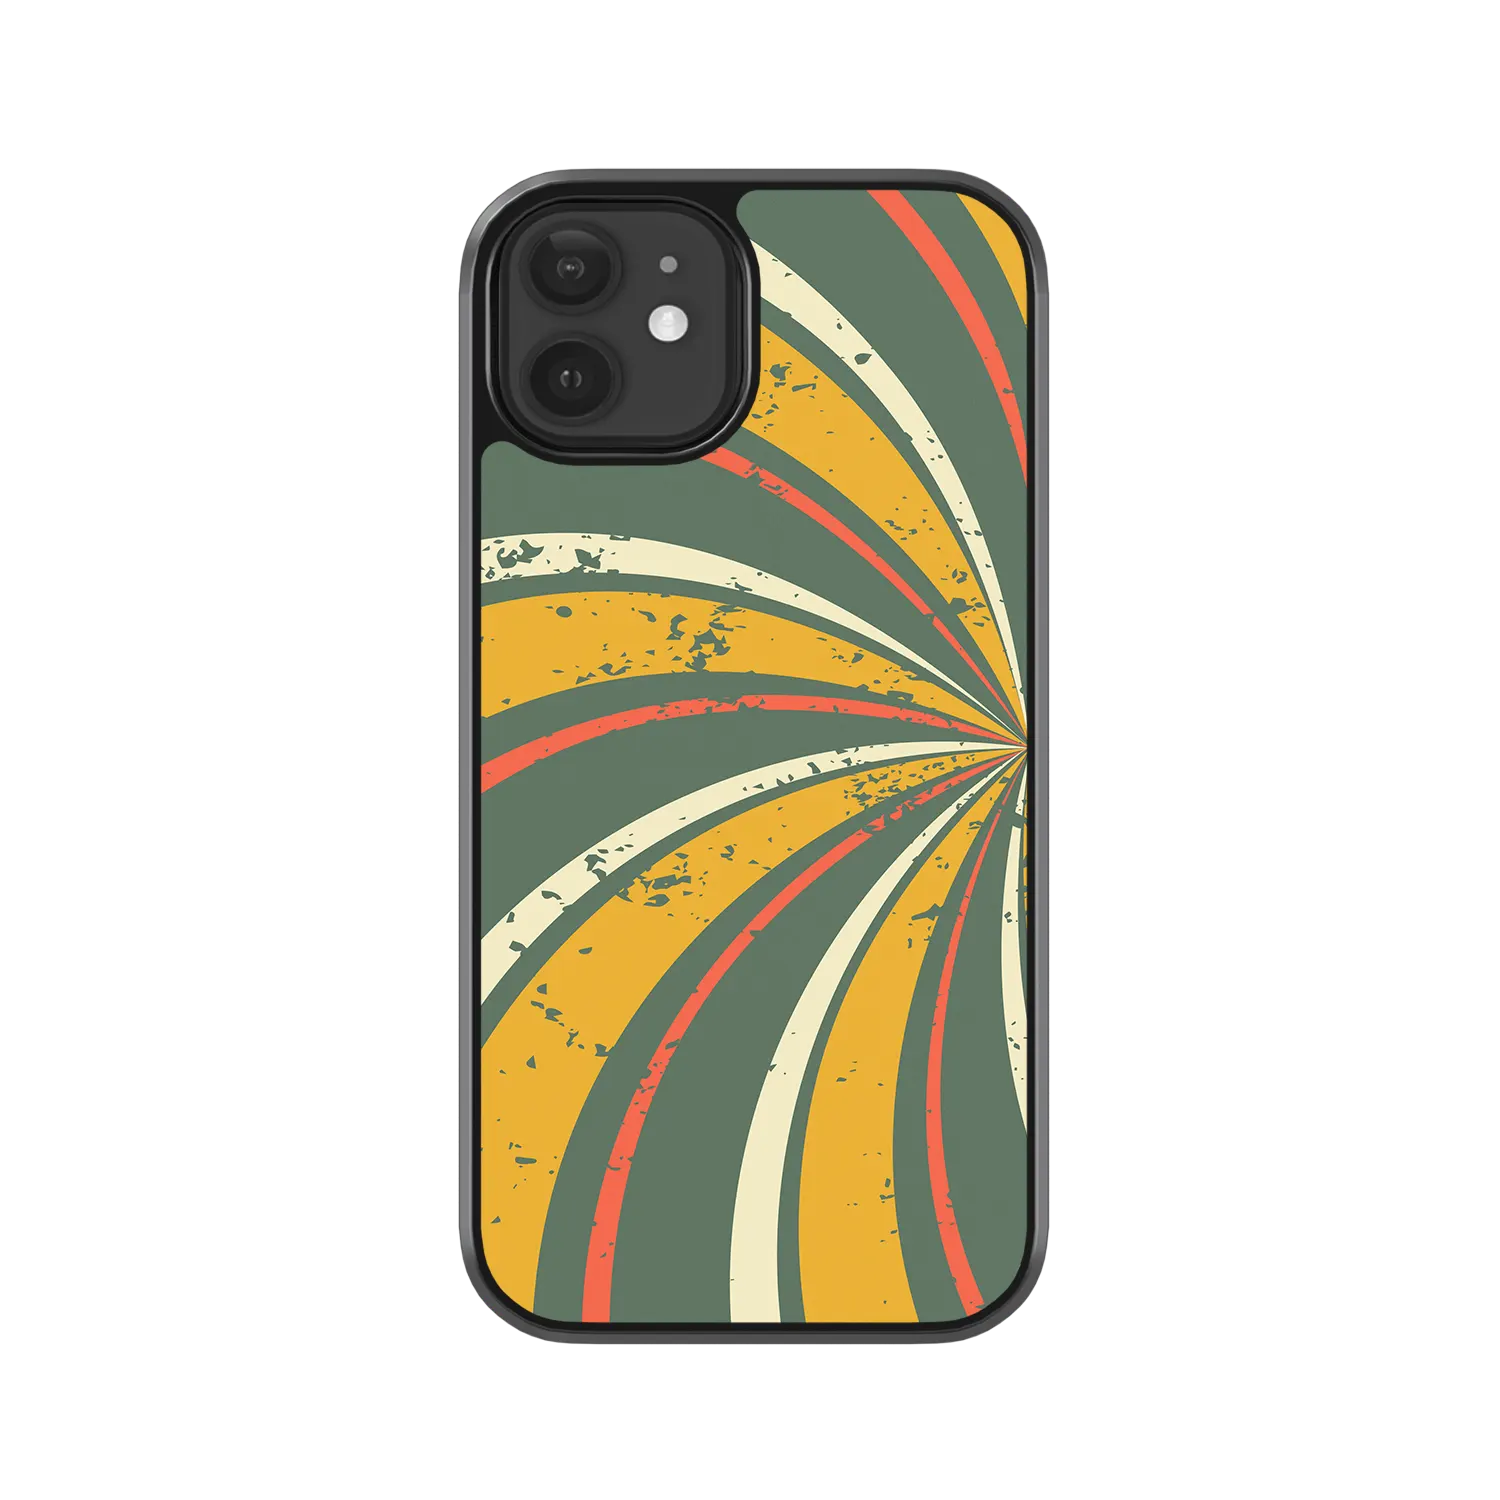 Retro Grunge iphone 12 case